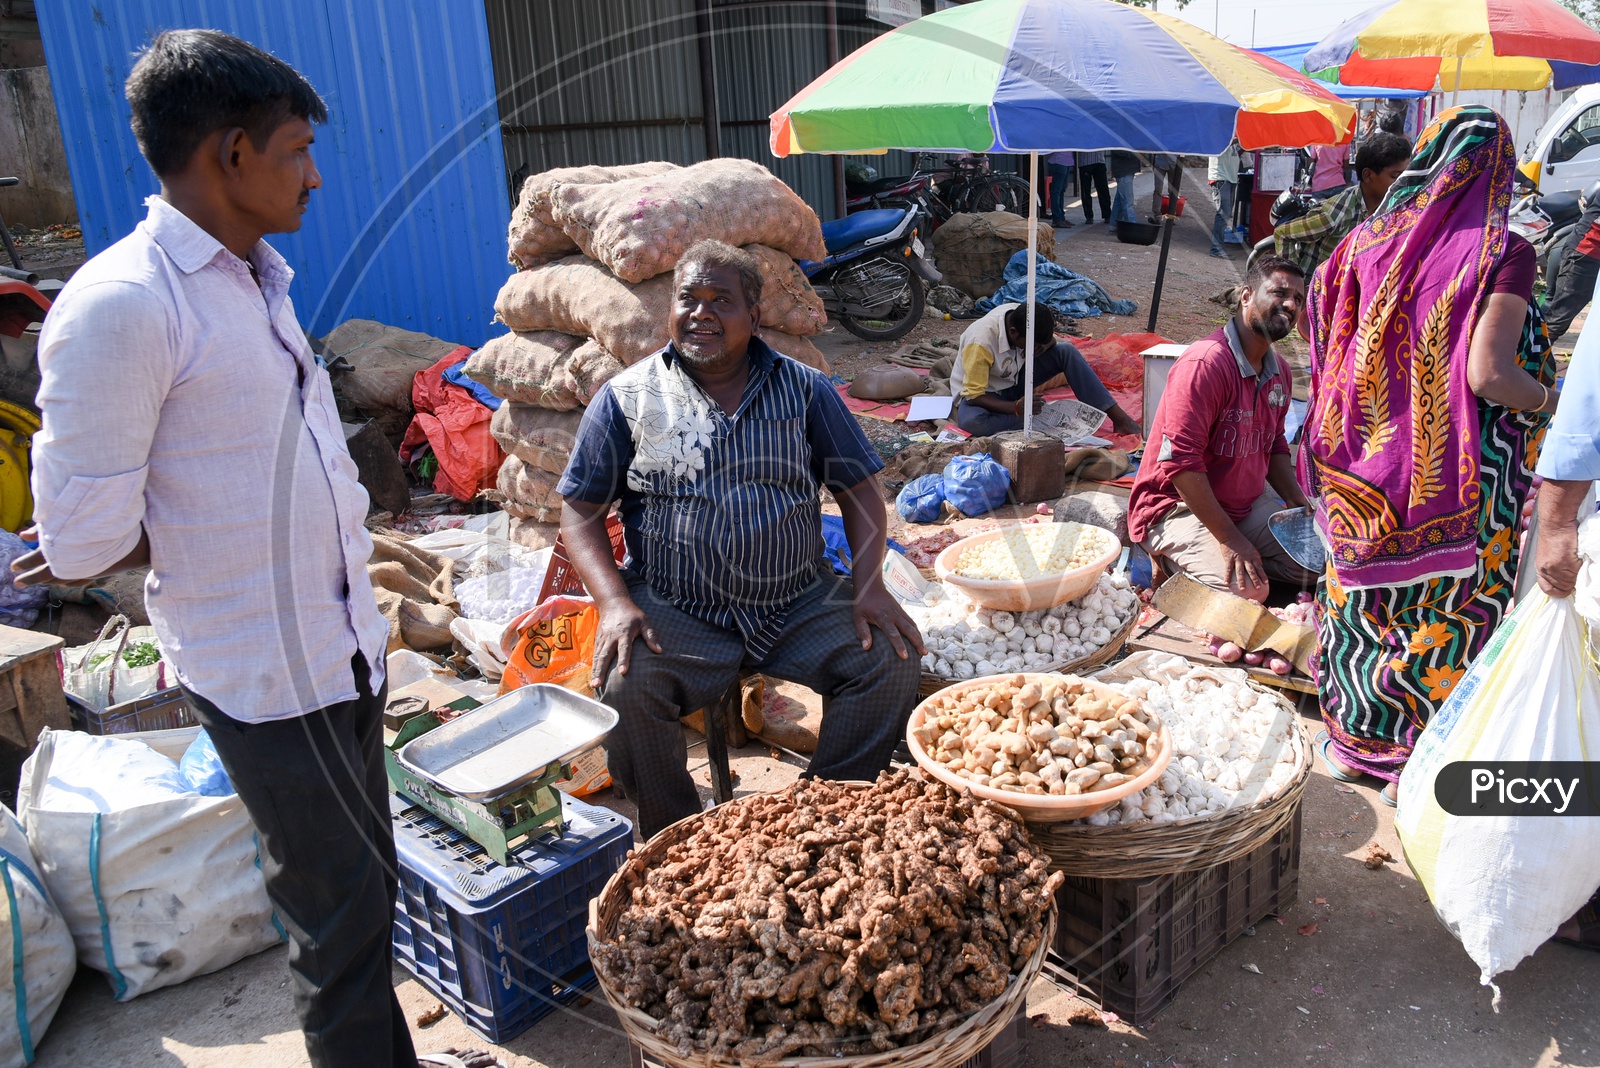 Vendor selling garlic and ginger